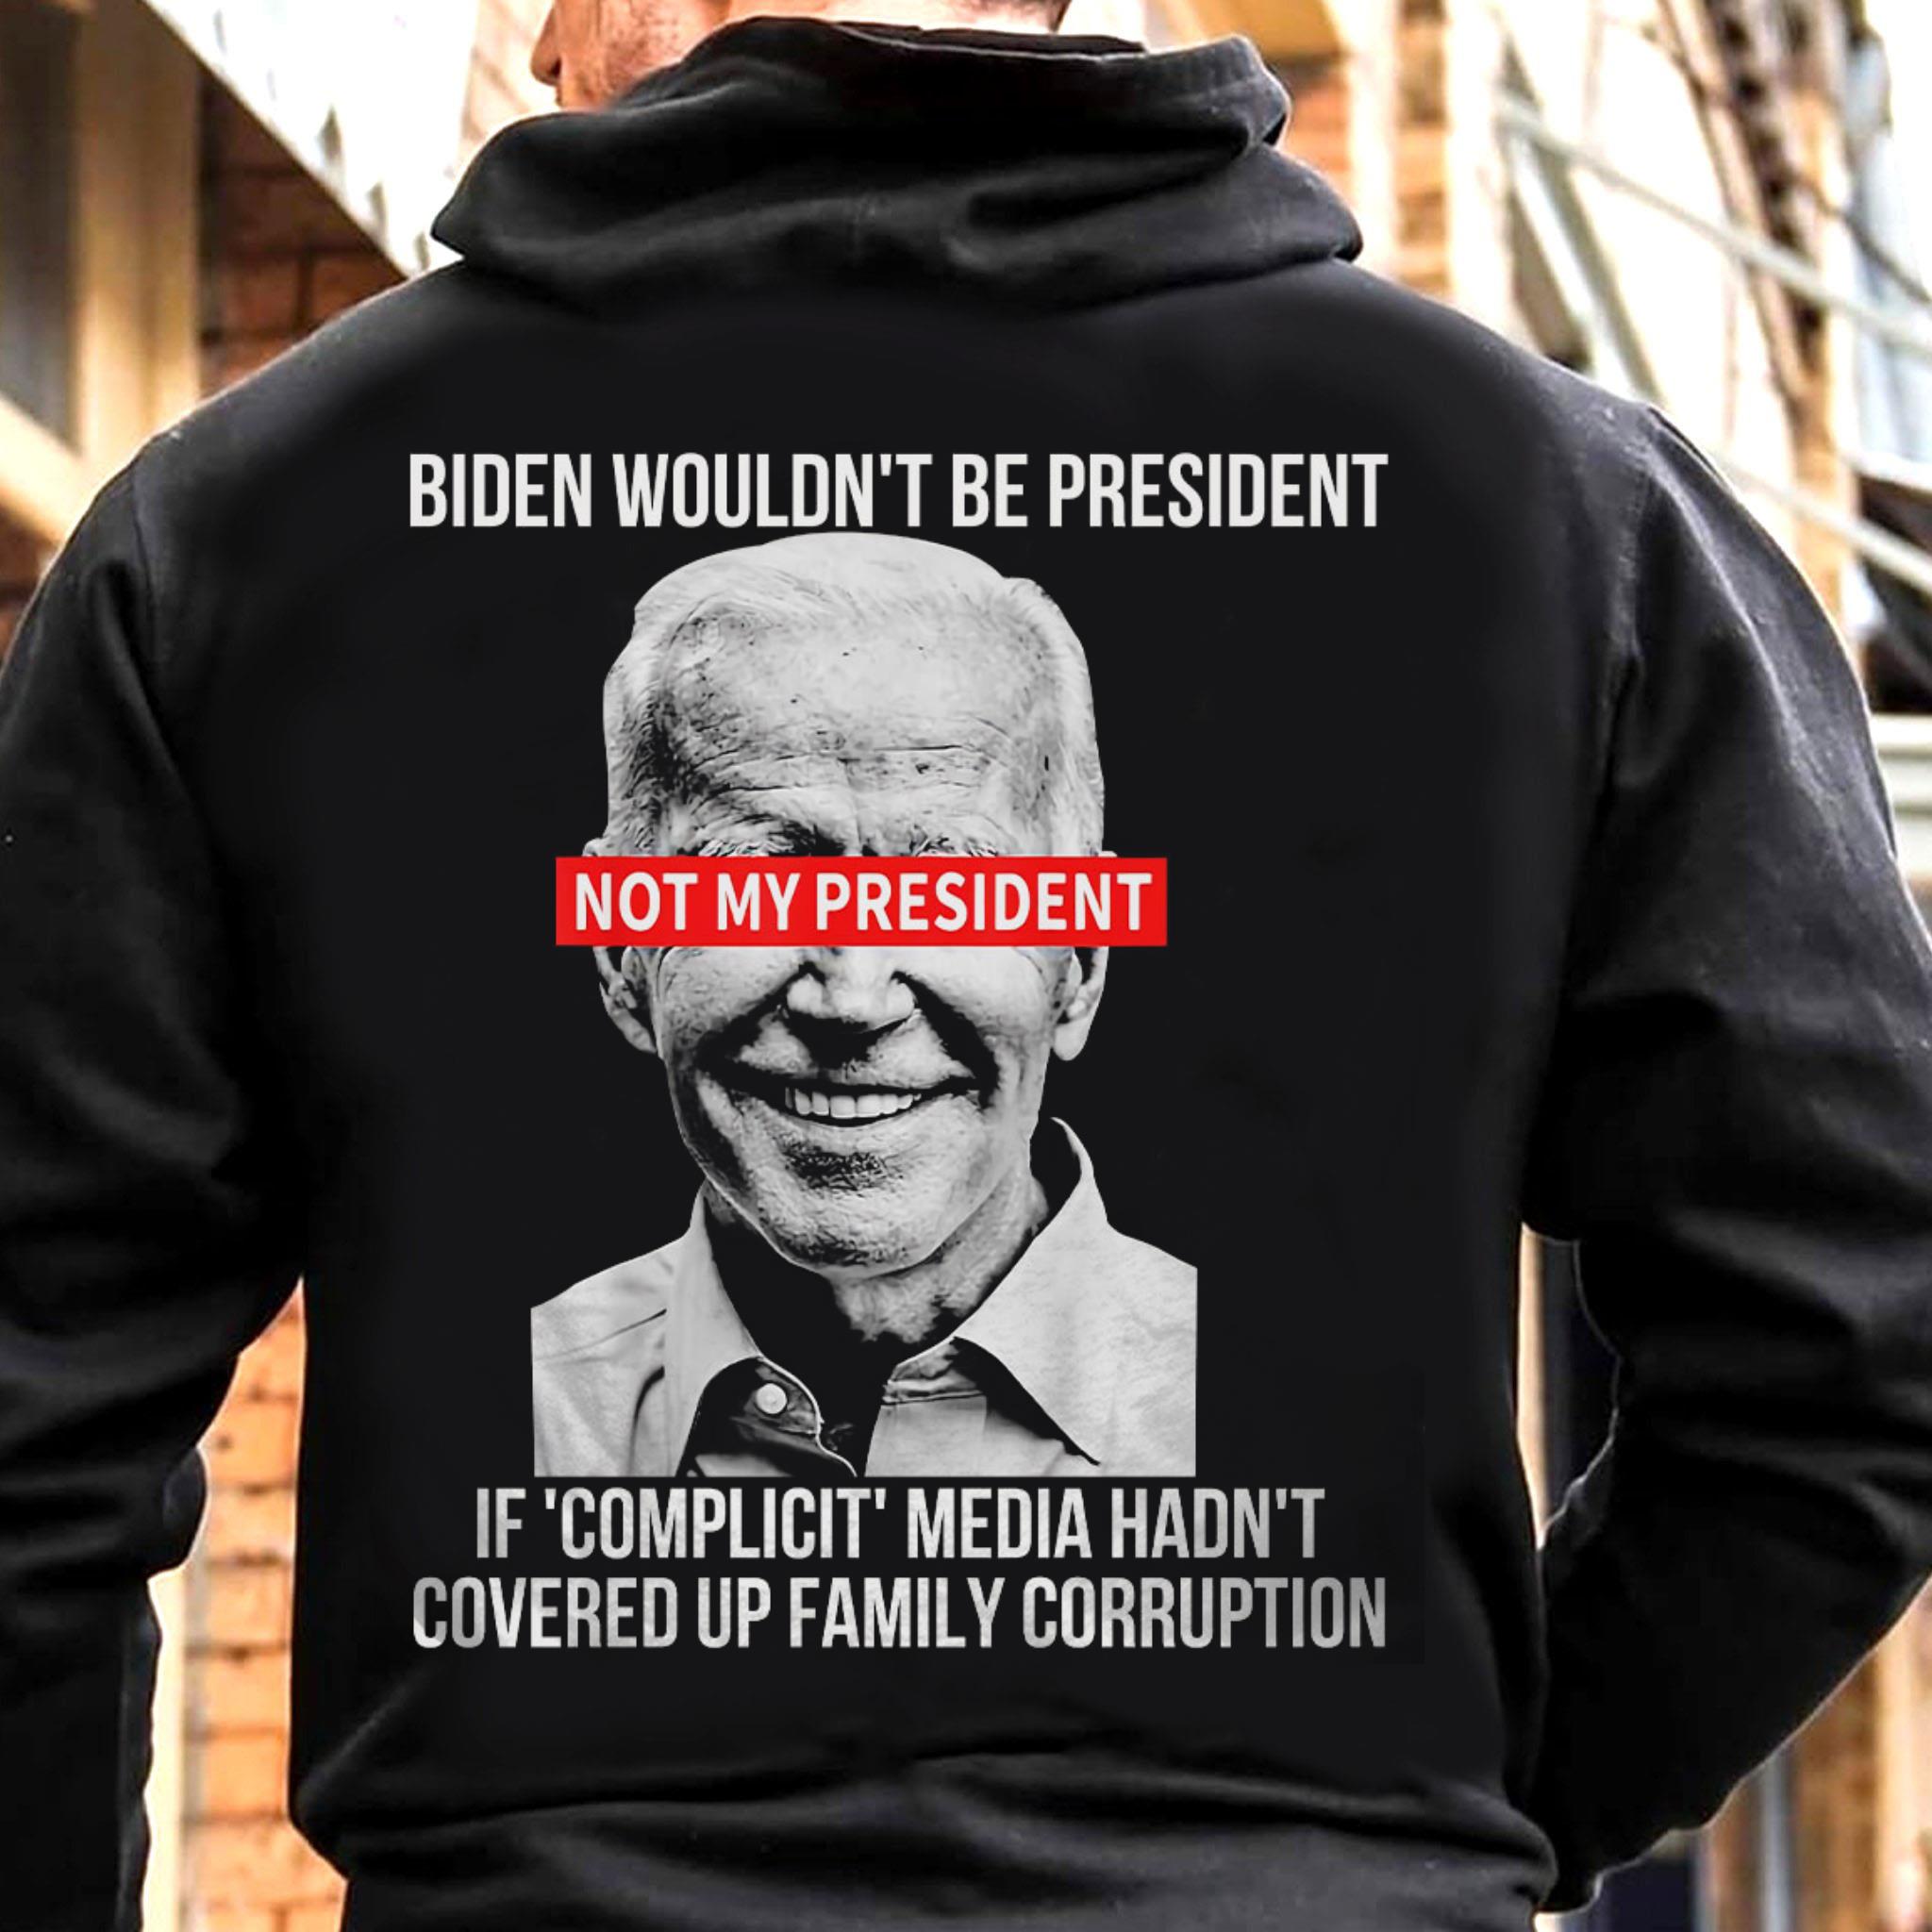 Biden wouldn’t be president not my president if complicit media shirt